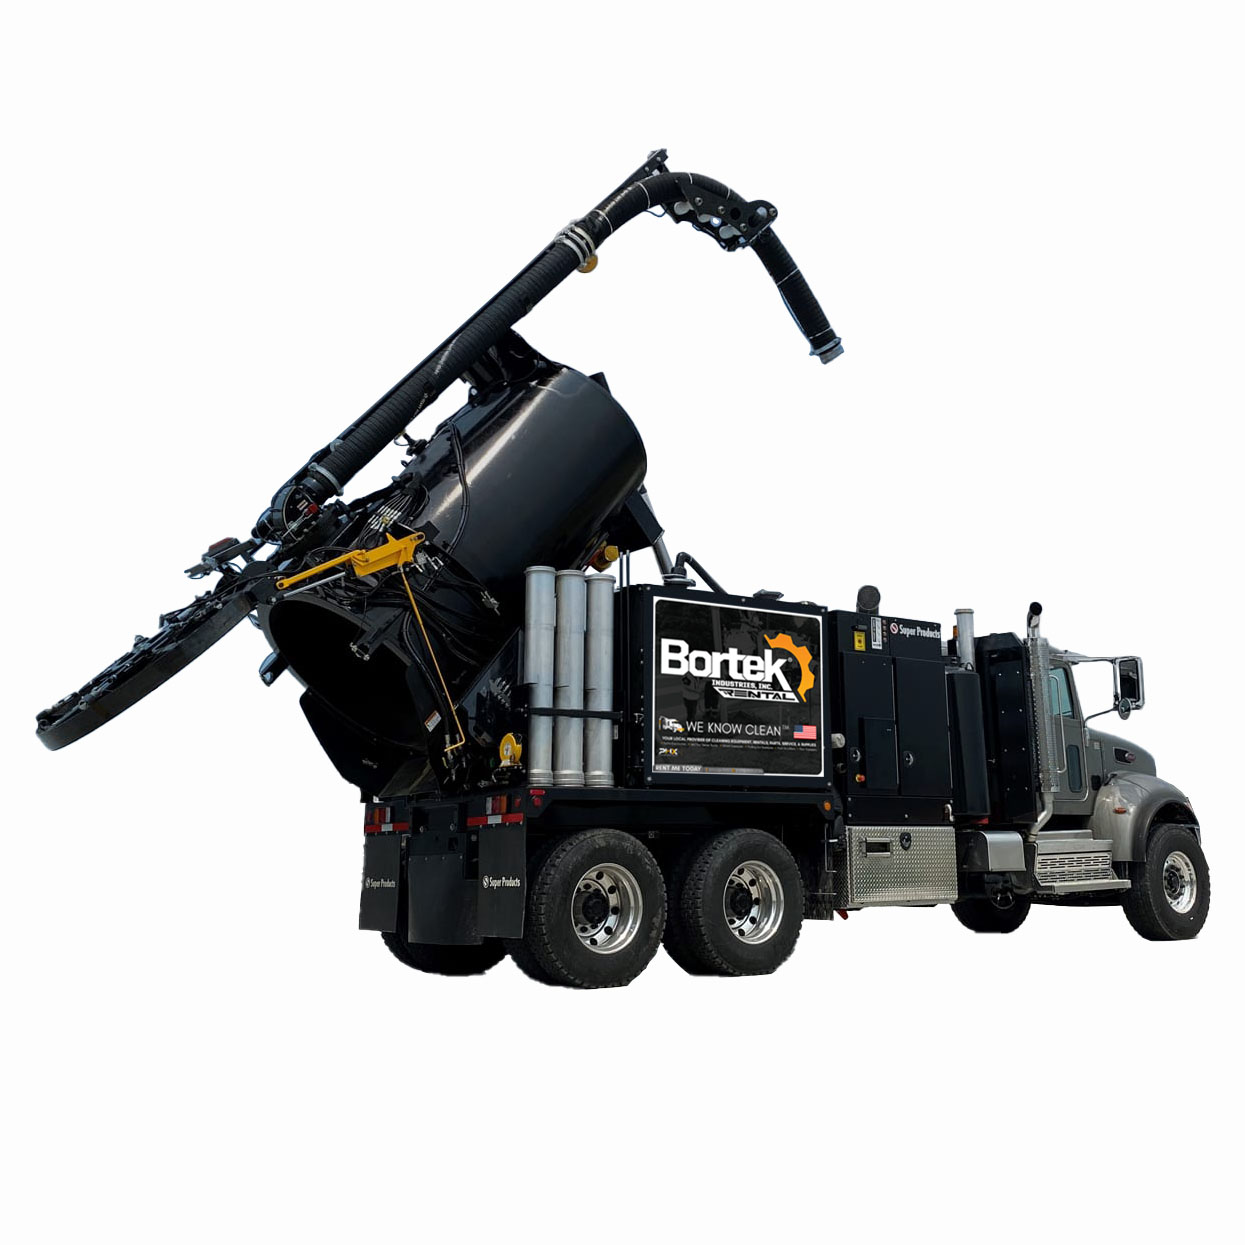 Super Products Mud Dog 700 Hydro Excavator Sewer Jetter Vac Truck Rental